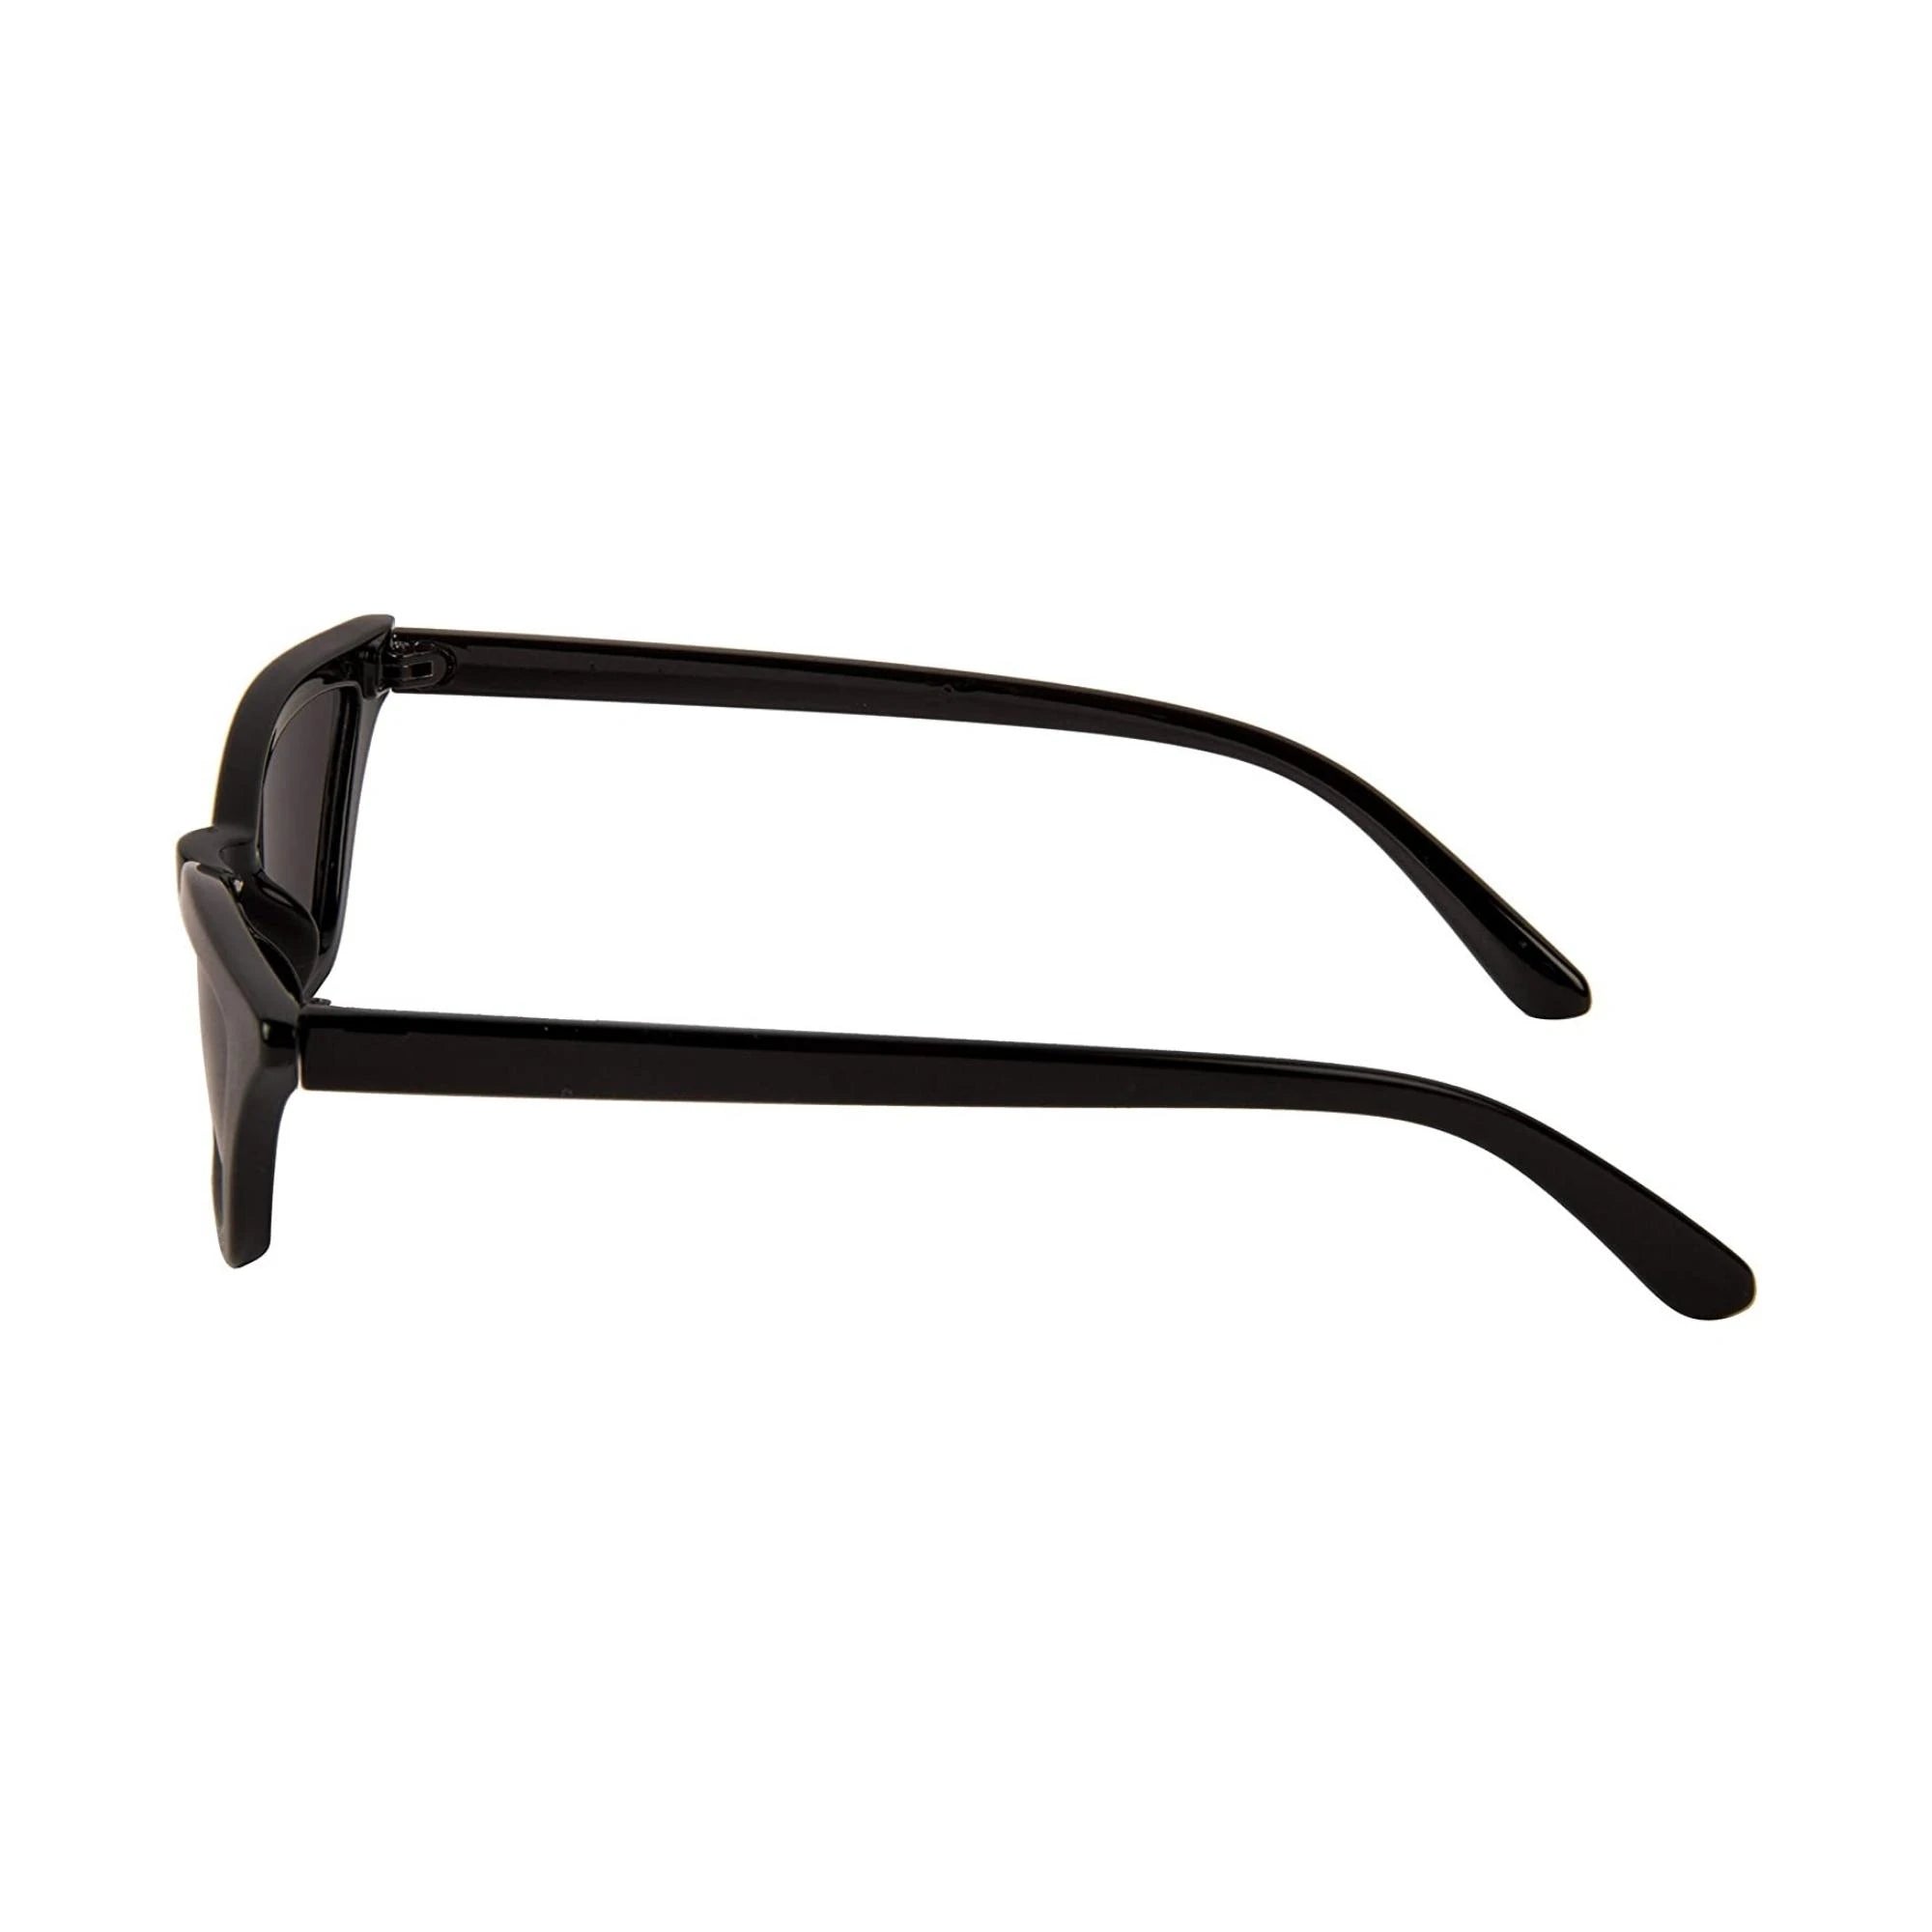 Fame Series Cateye Sunglasses For Women - Black